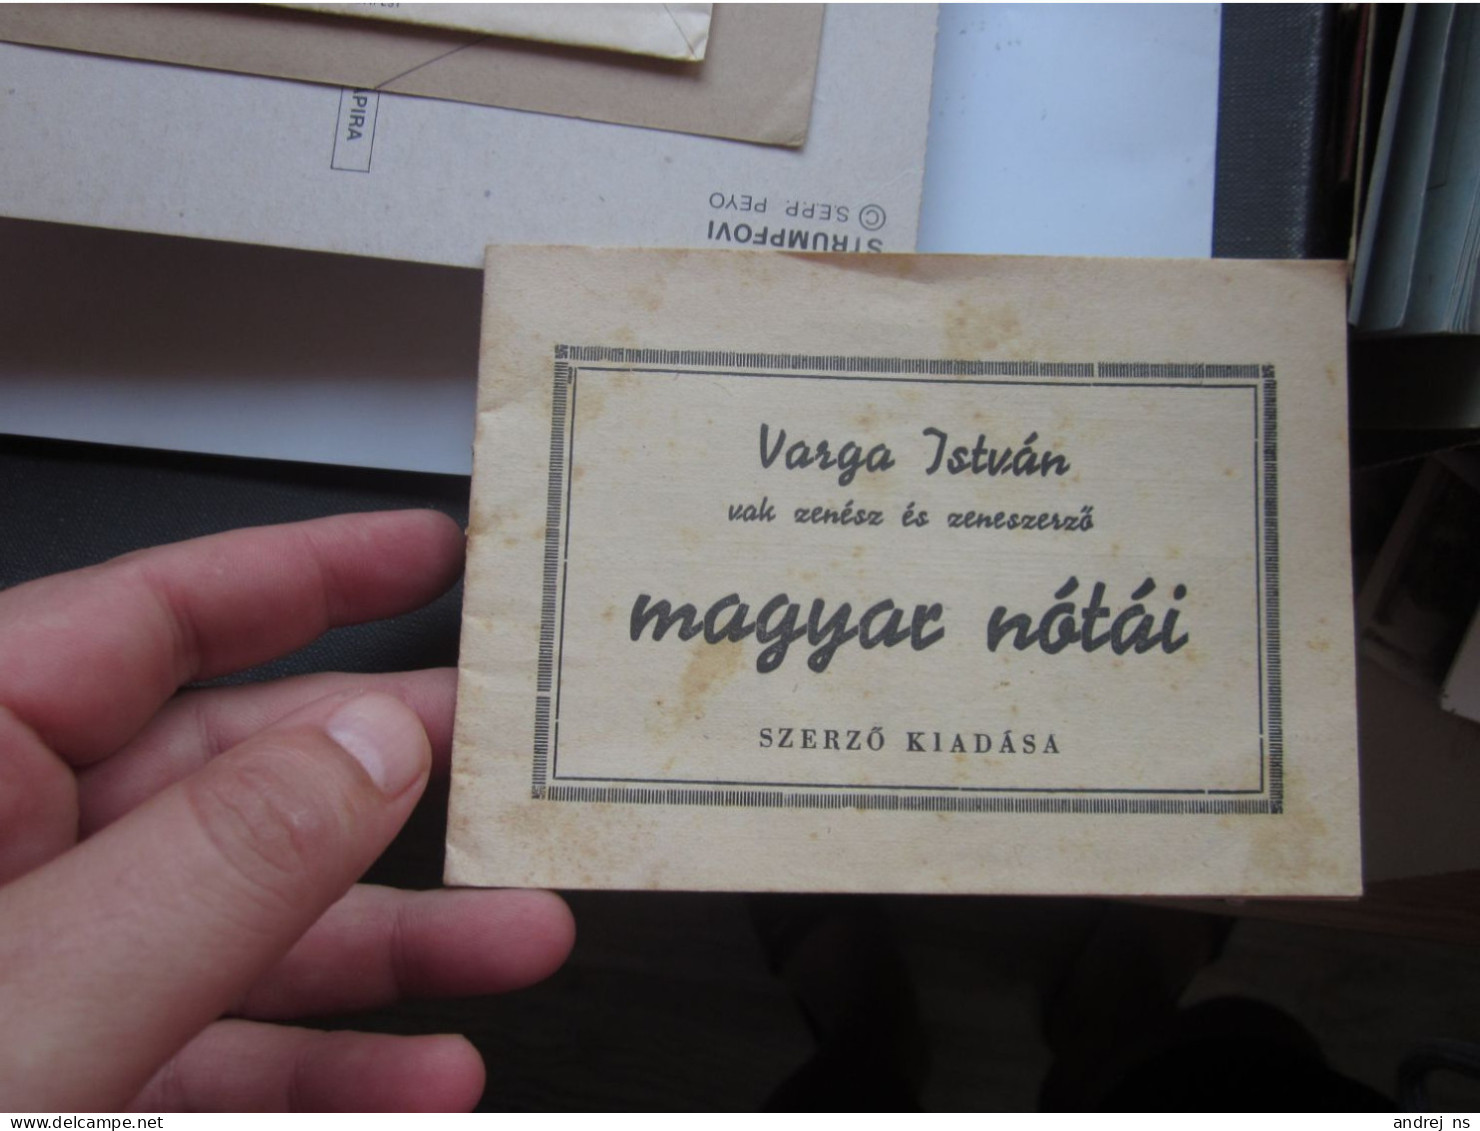 Hungarian songs, and notes for songs Varga Istvan vak zenesz es zeneszerzo magyar notai 1941